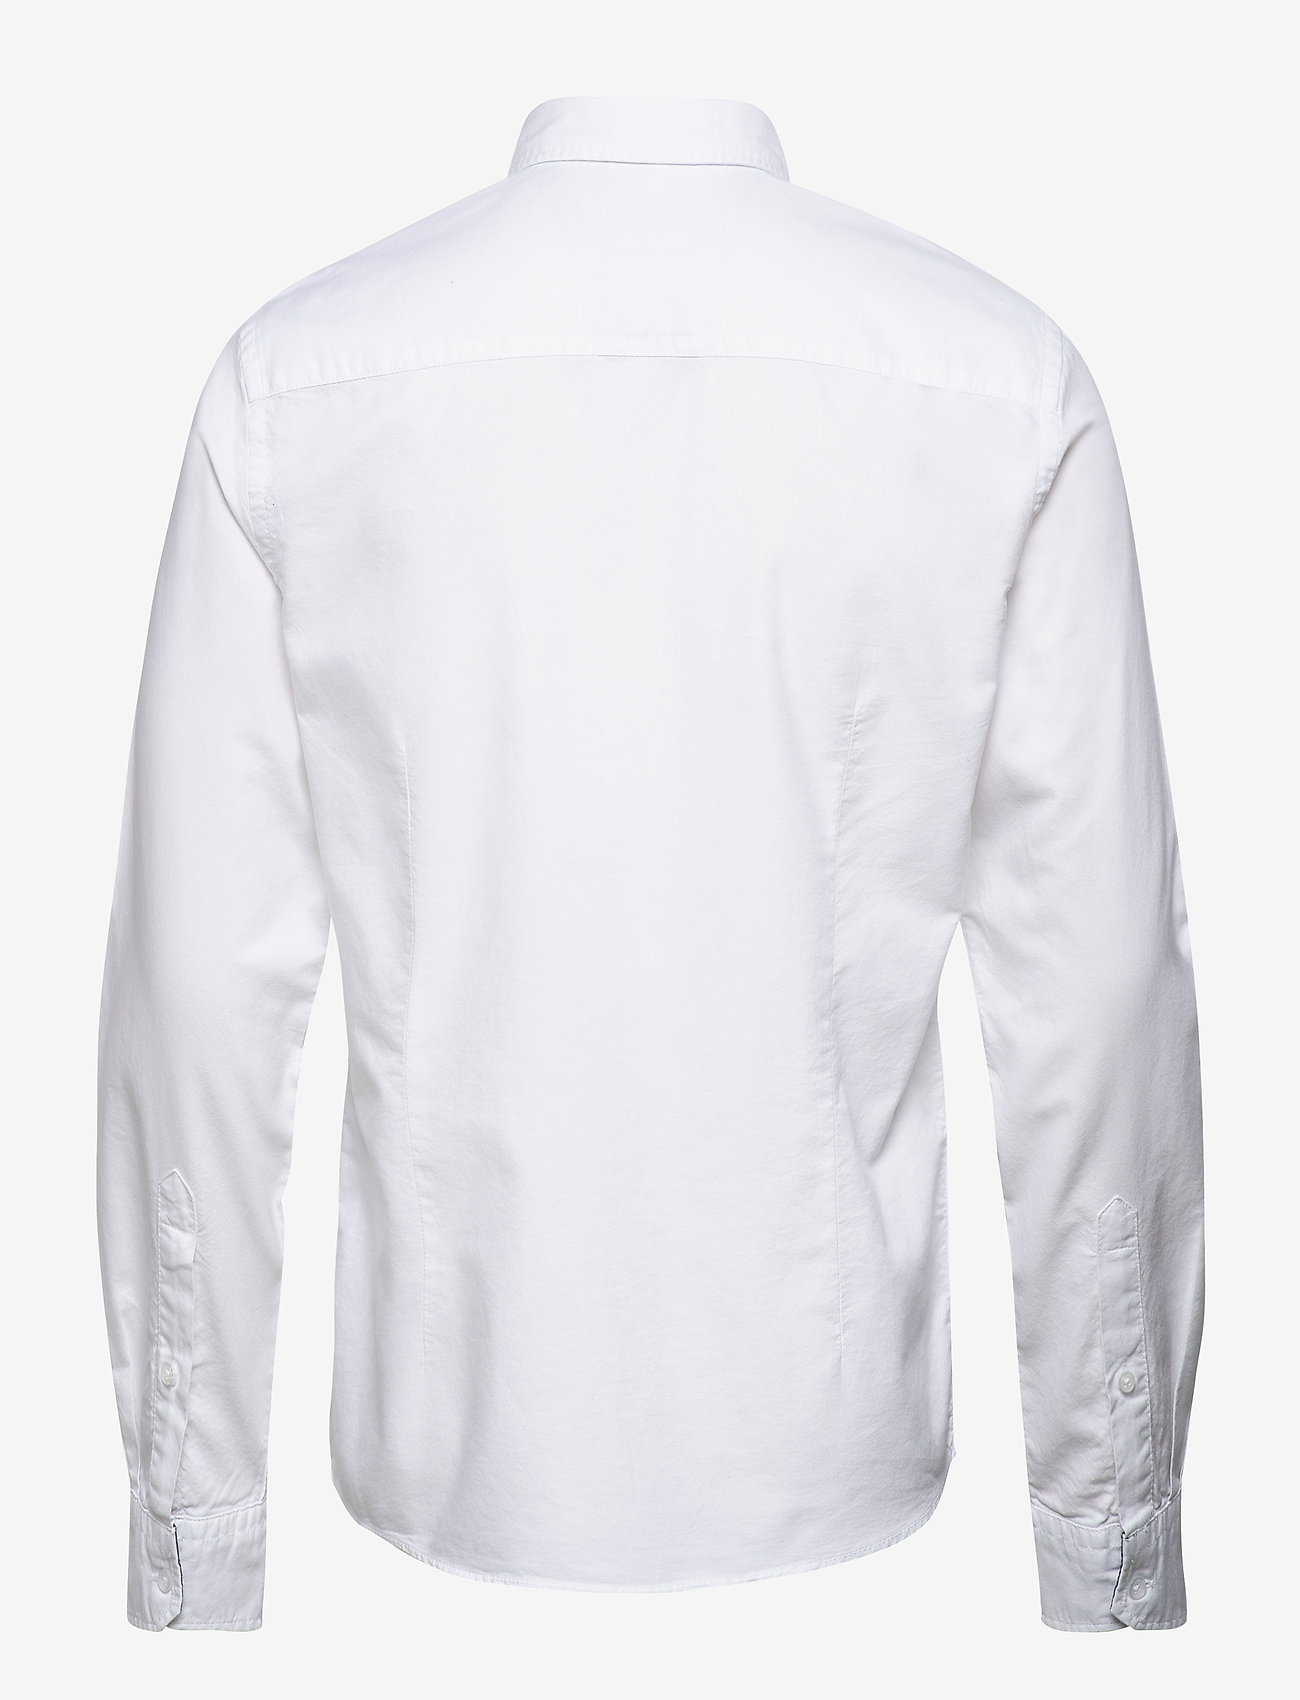 Blend - BHNAIL shirt - oxford shirts - white - 1